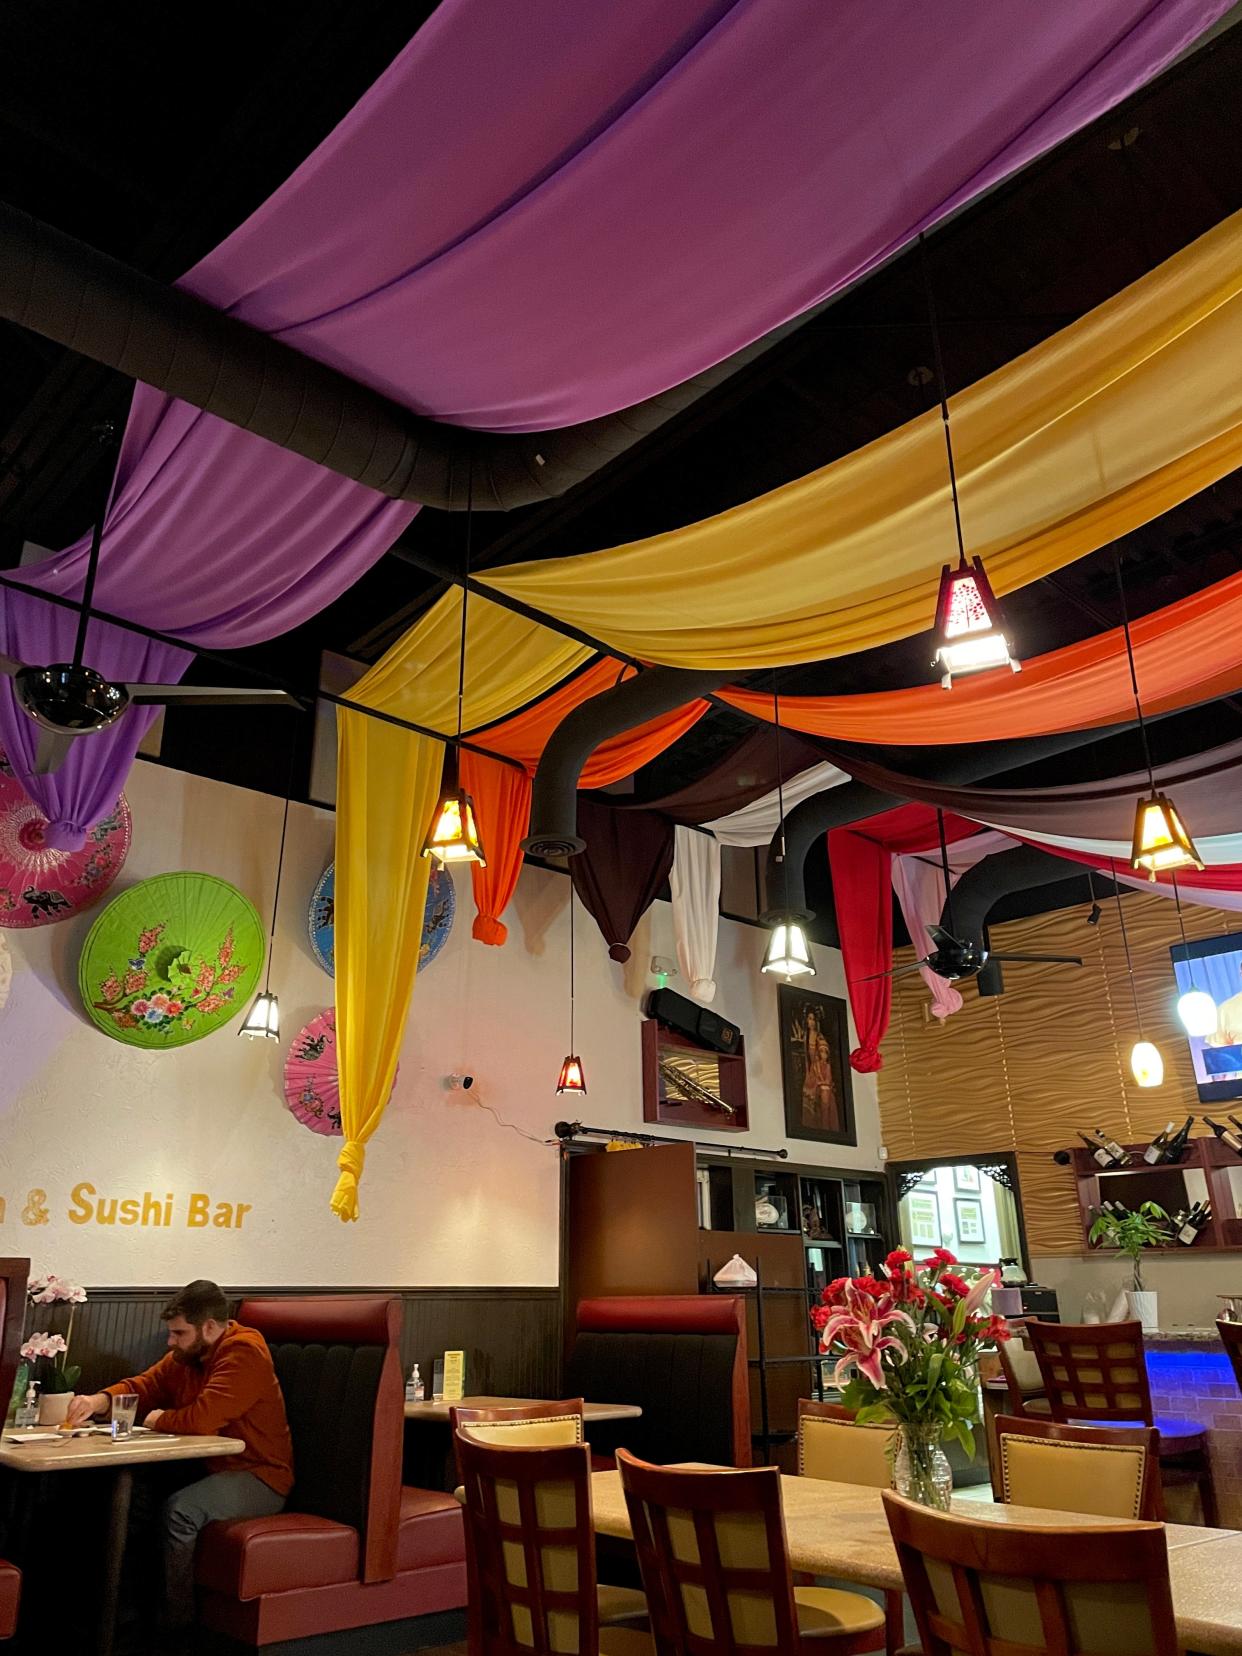 Thai Lanna & Sushi Bar has a bright and welcoming vibe.